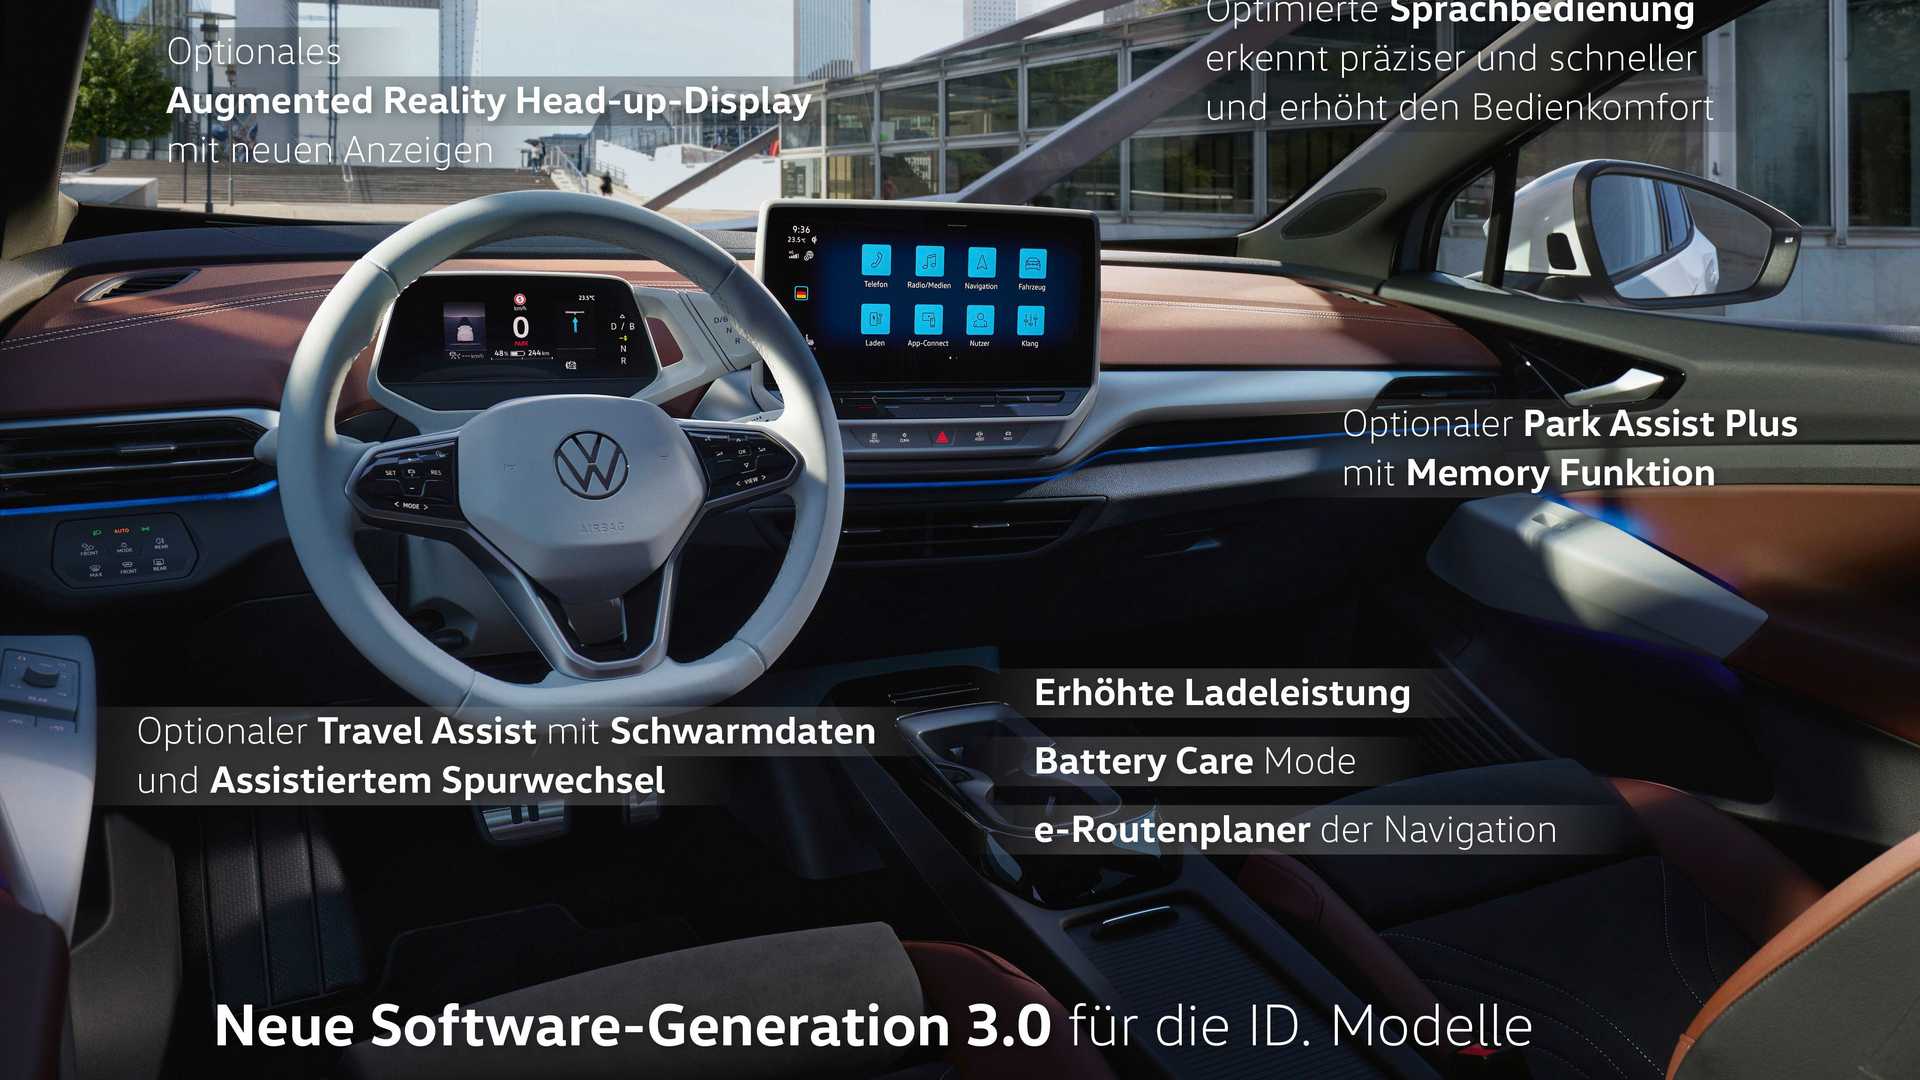 Volkswagen's ID Software 3.0 brings interesting news